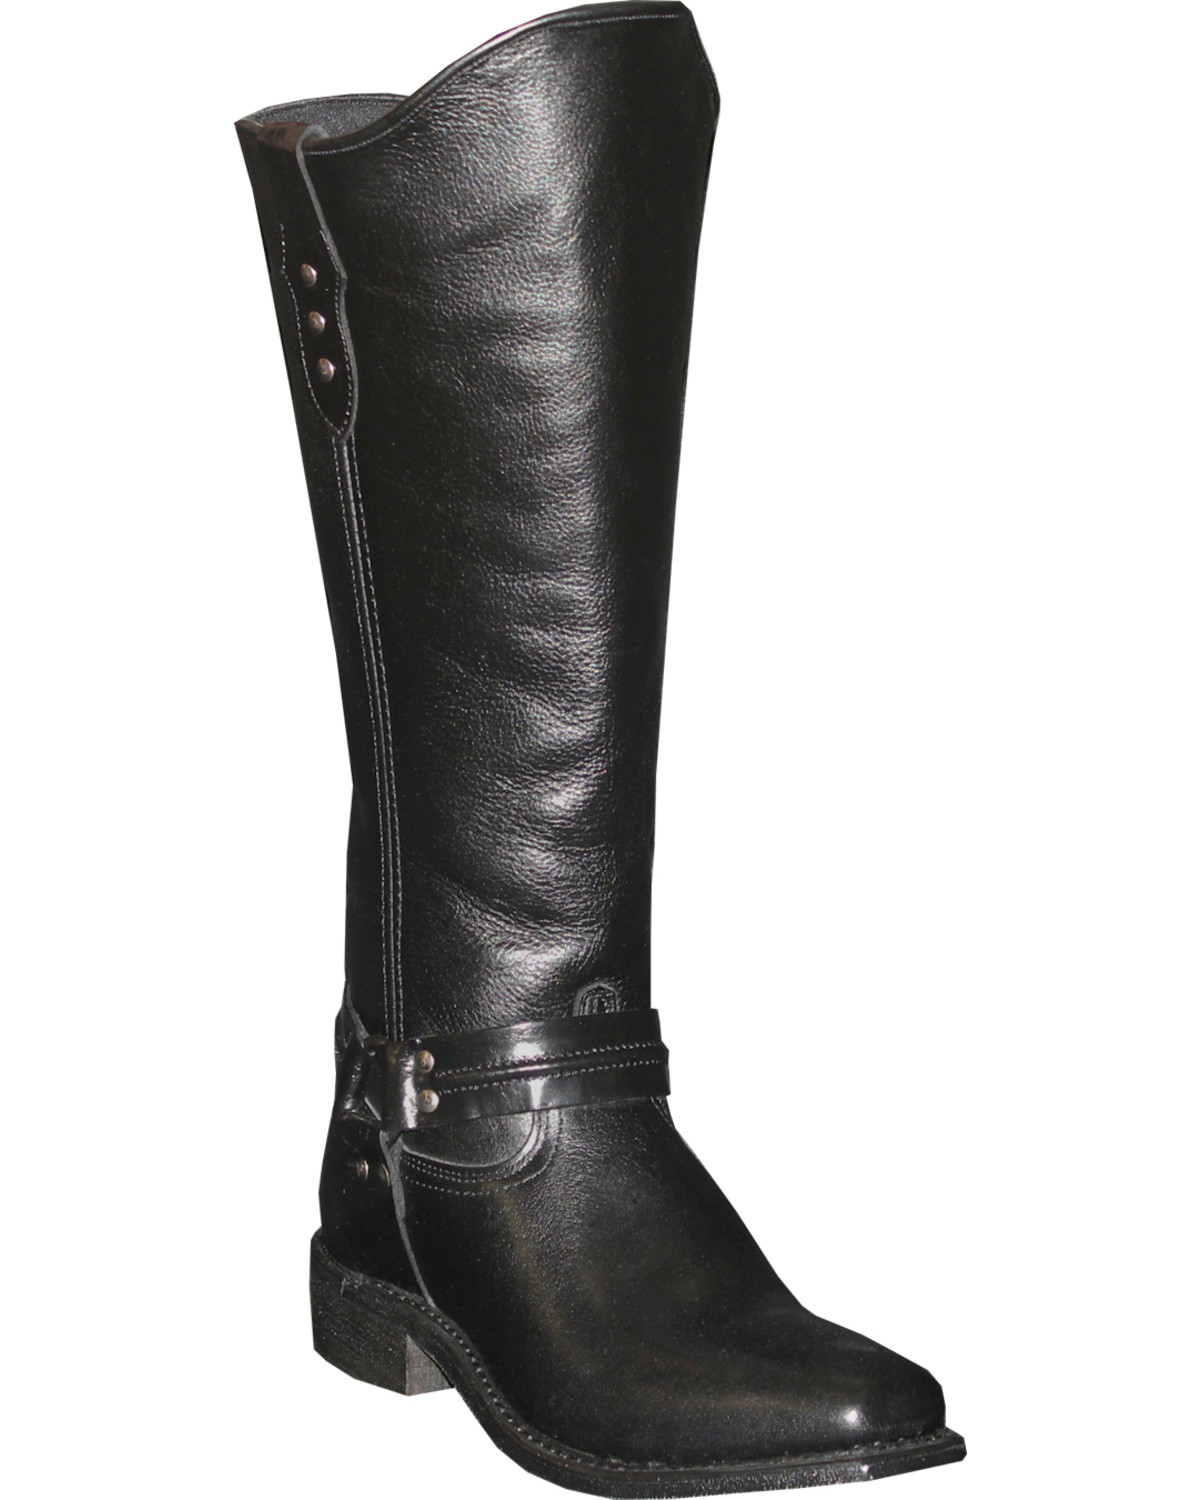 black leather wellington boots